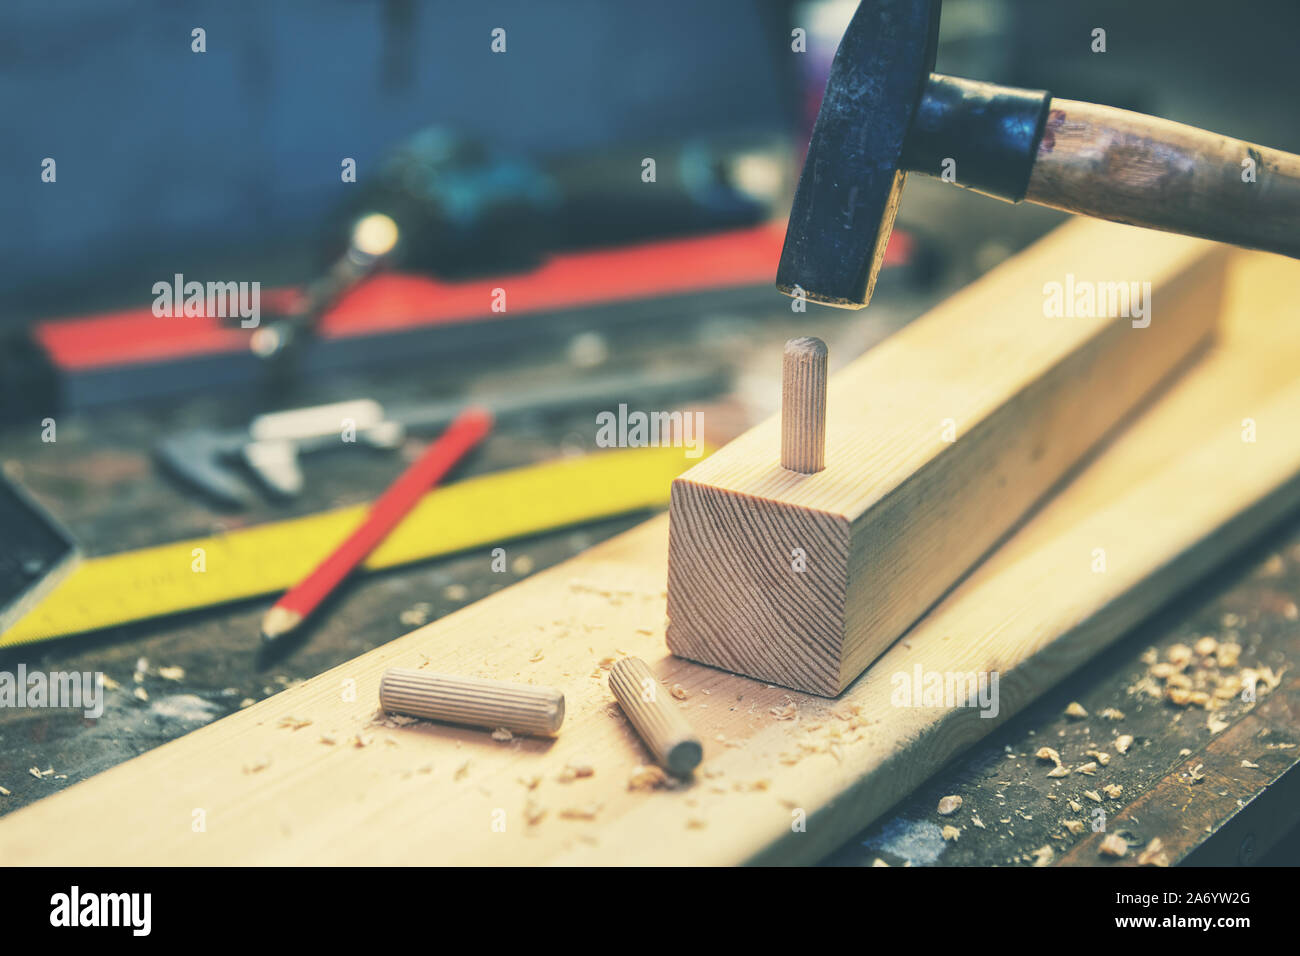 Holzbearbeitung - holzdübel Gemeinsame Stockfoto